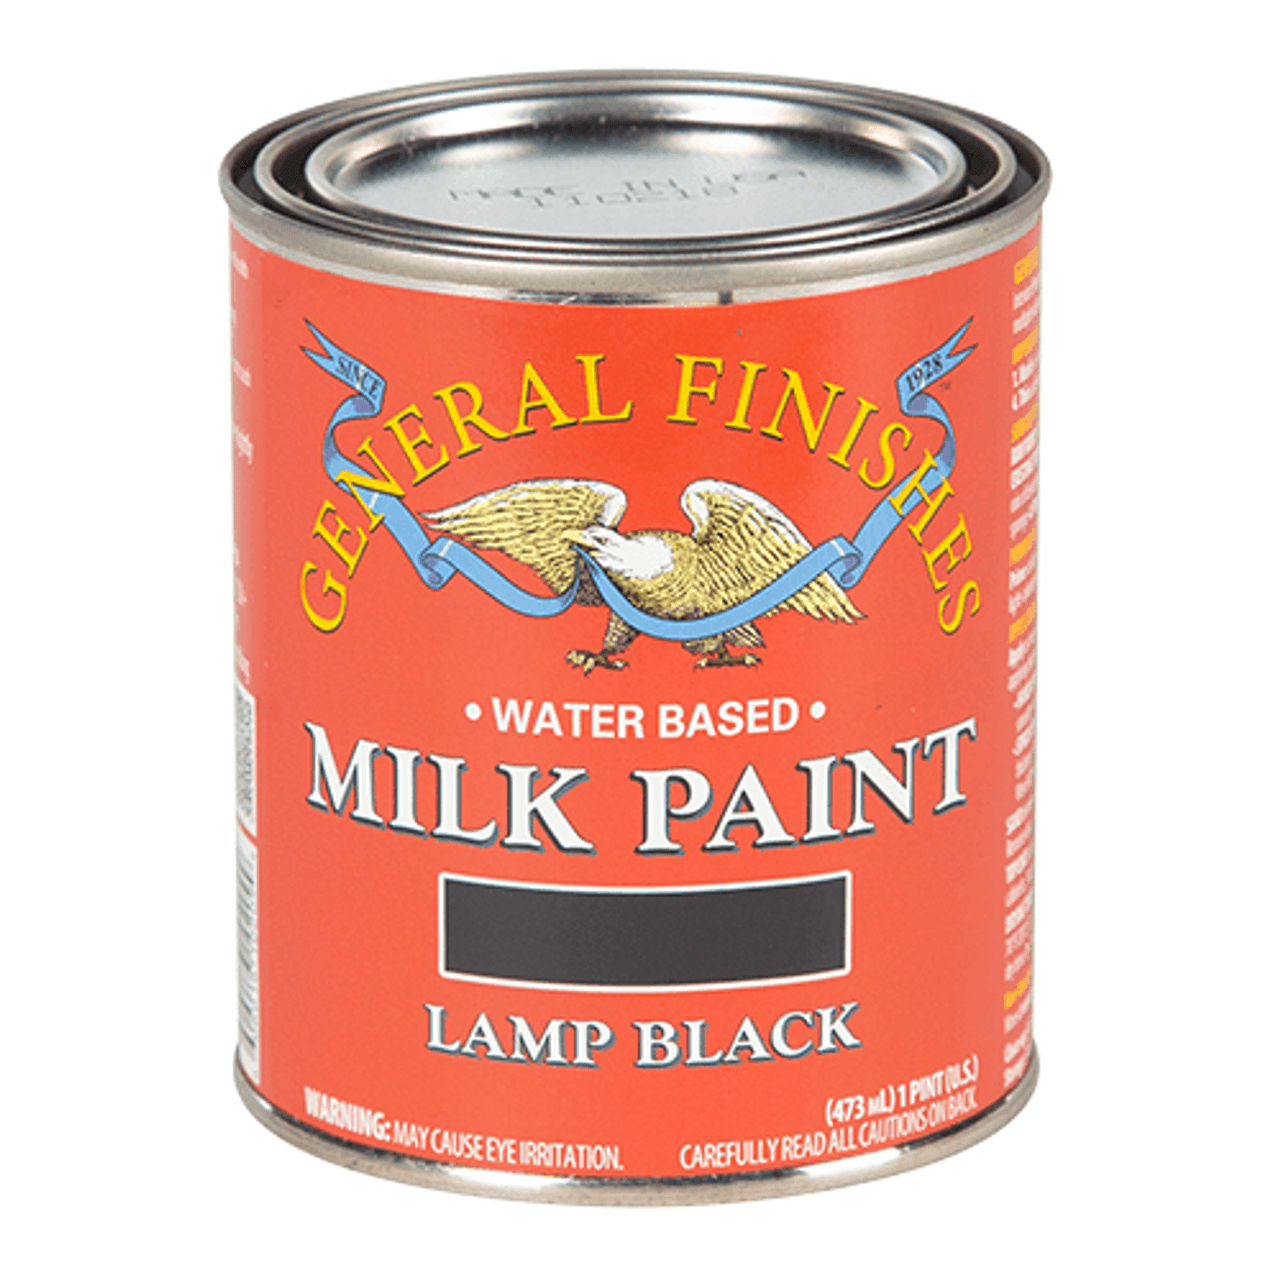 Milk Paint- Lamp Black Pint